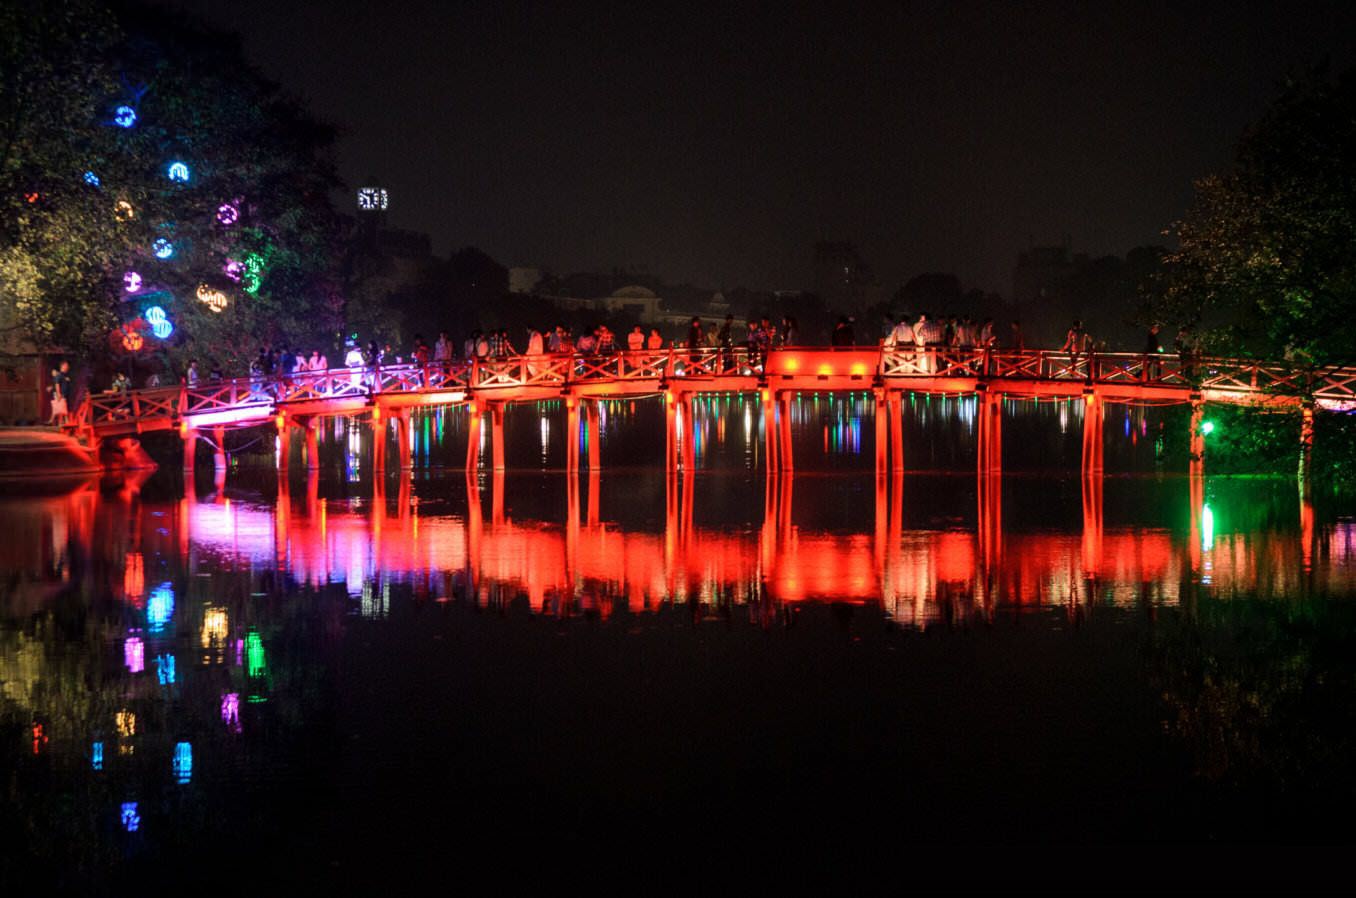 The Huc bridge Hoan Kiem lake in Hanoi images